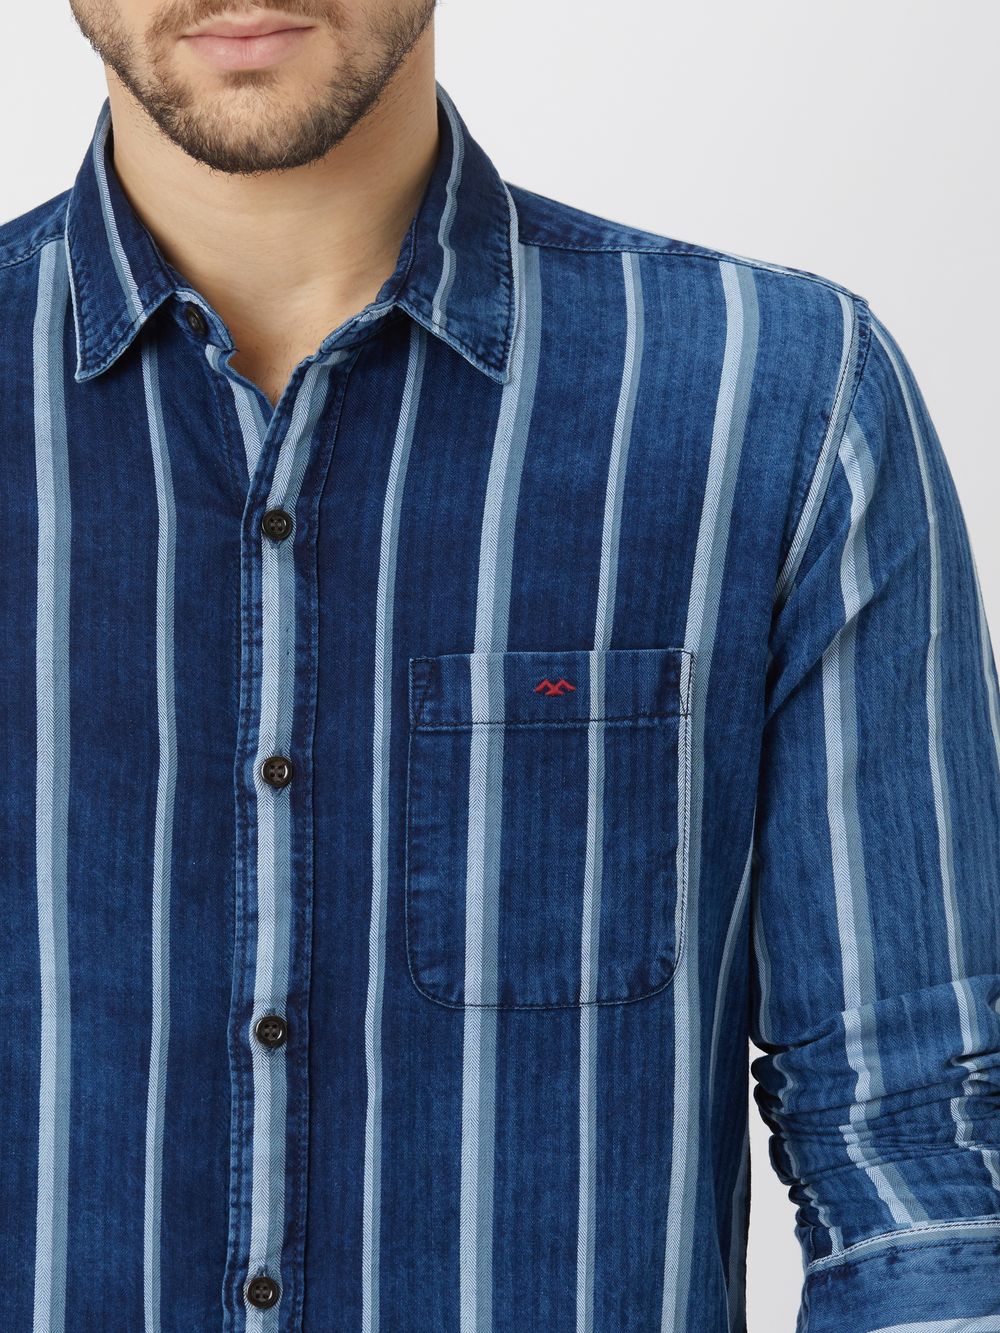 Indigo Blue & White Tonal Stripe Shirt